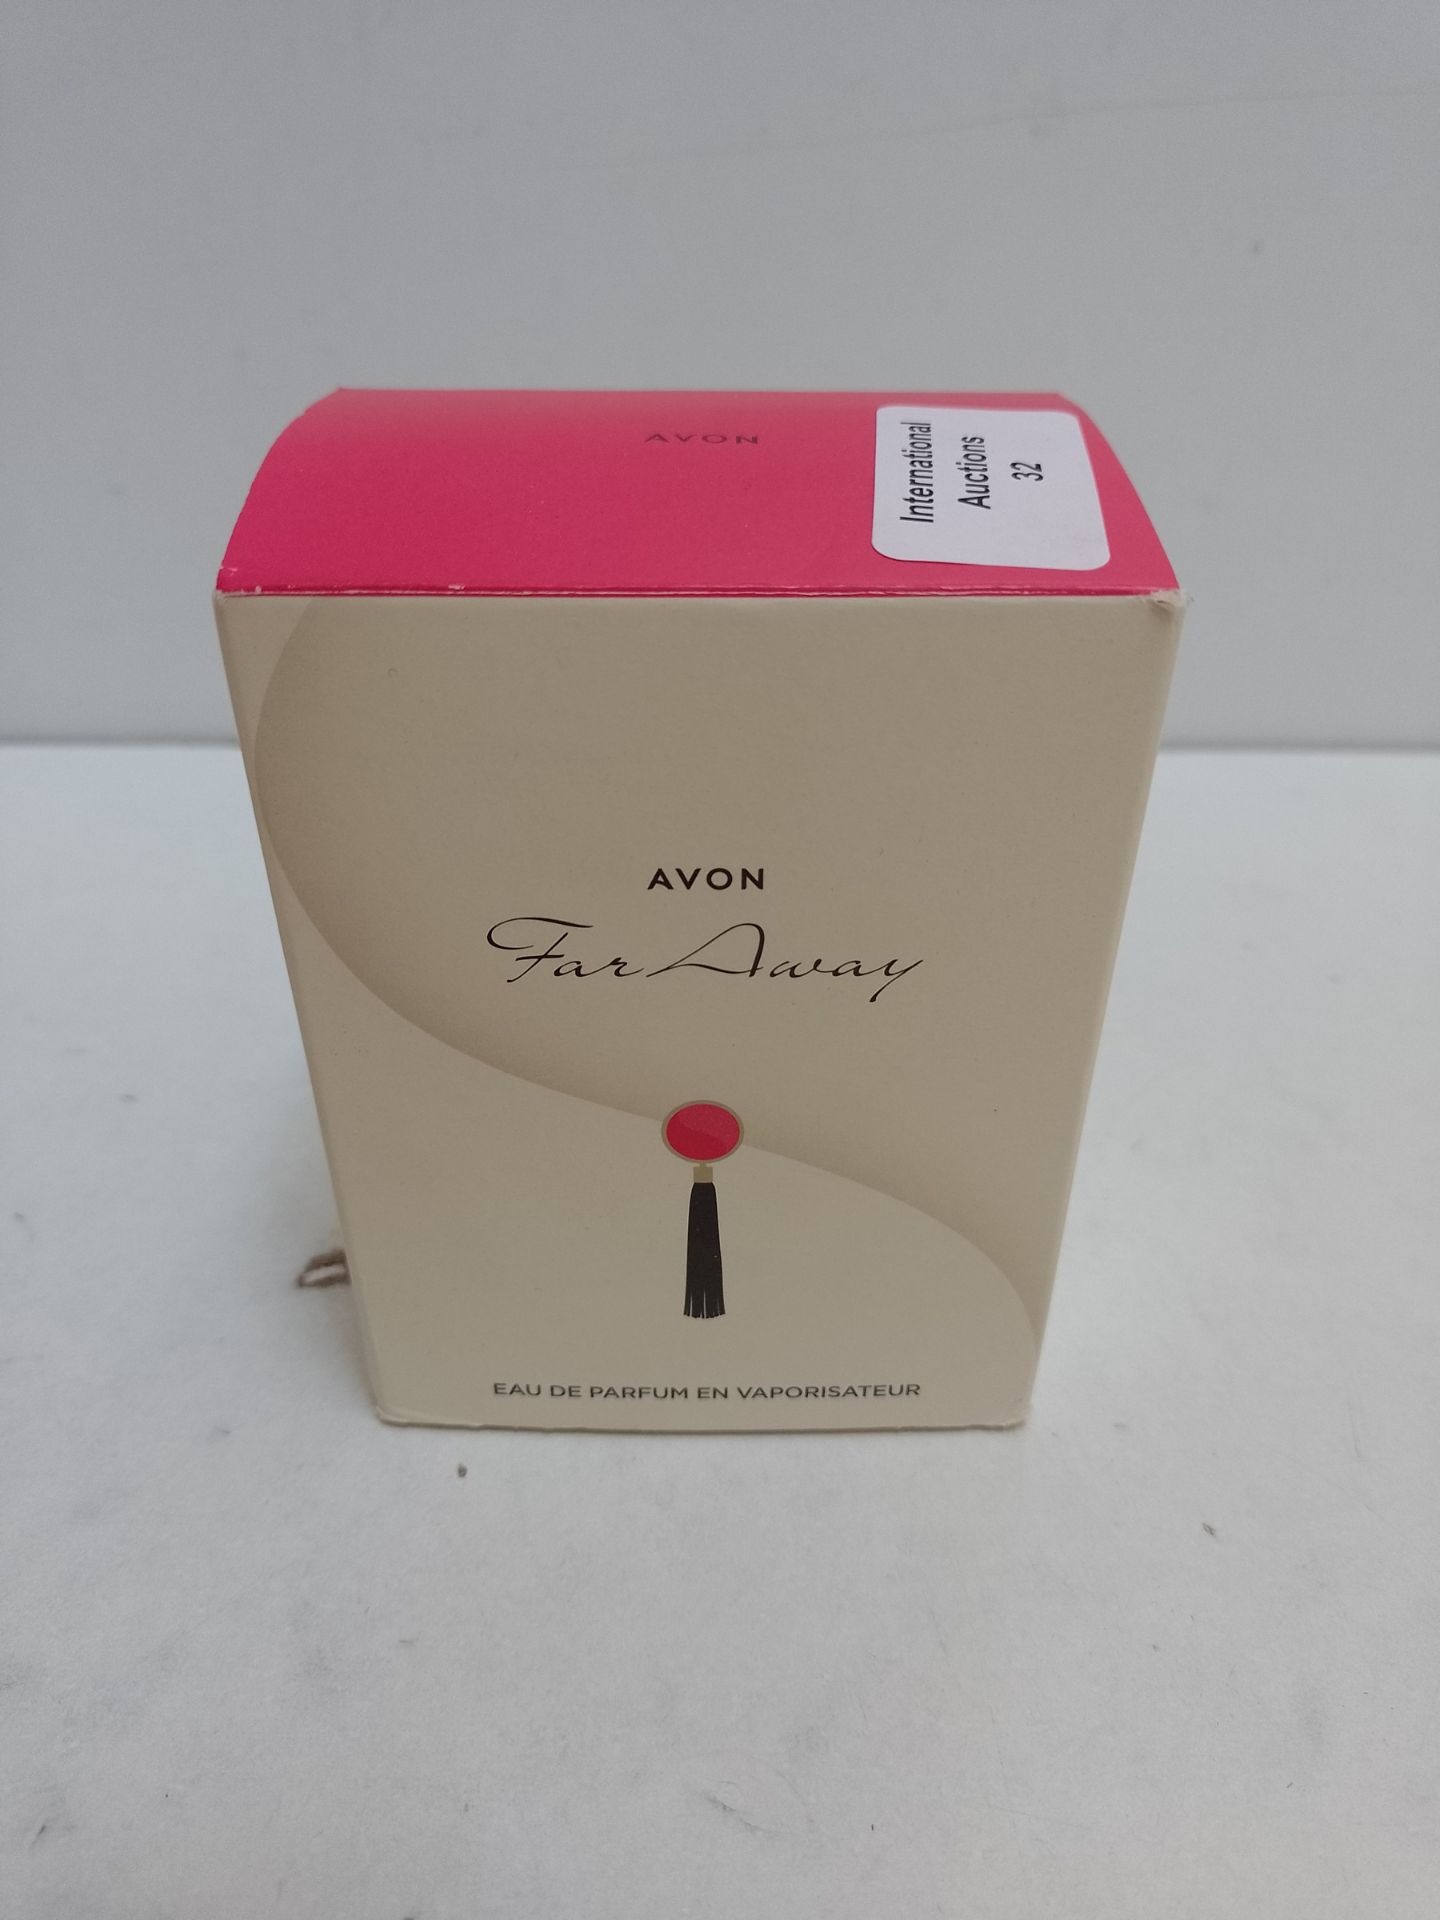 RRP £14.84 Avon Far Away Eau De Parfum Spray 1.7 oz each (perfume for women) - Image 2 of 2